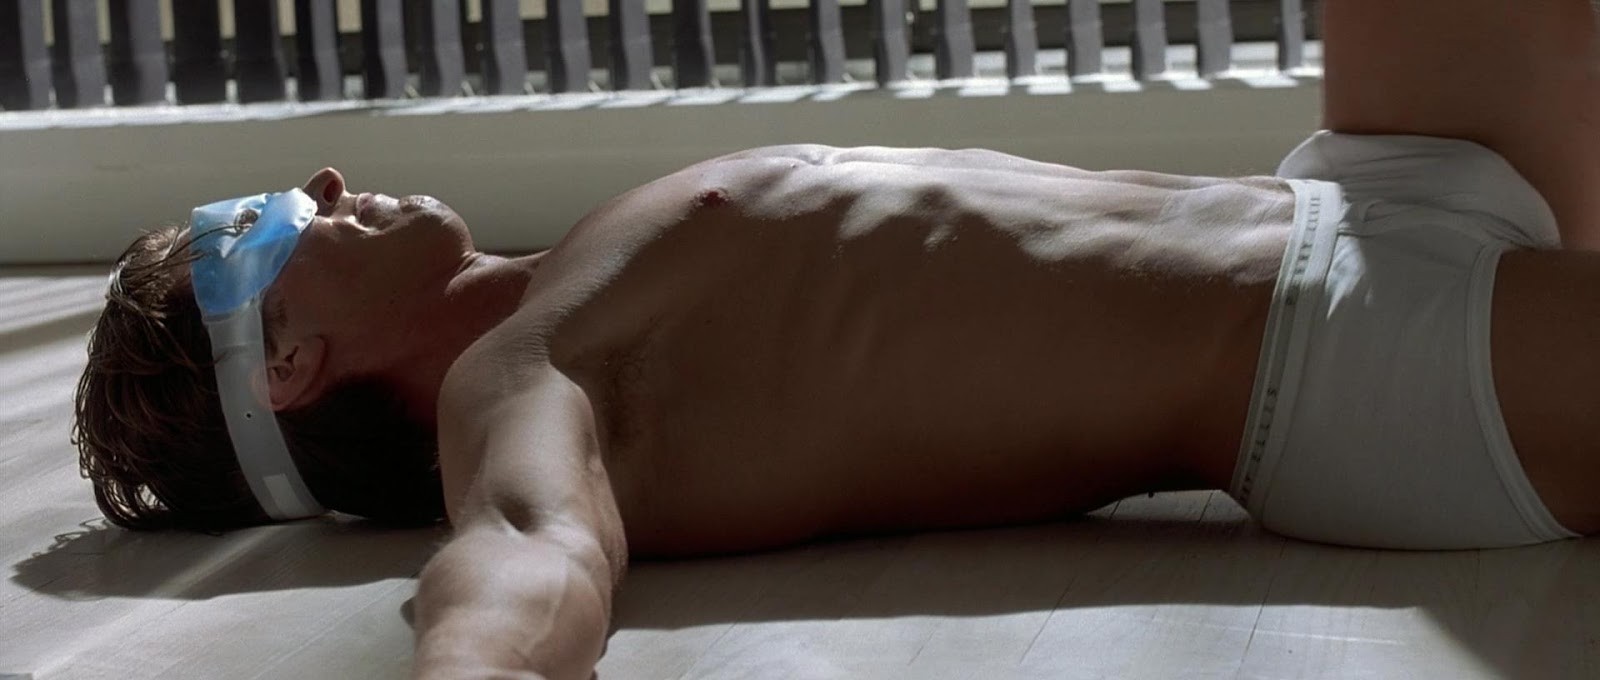 Christian Bale in "American Psycho" (2000) .